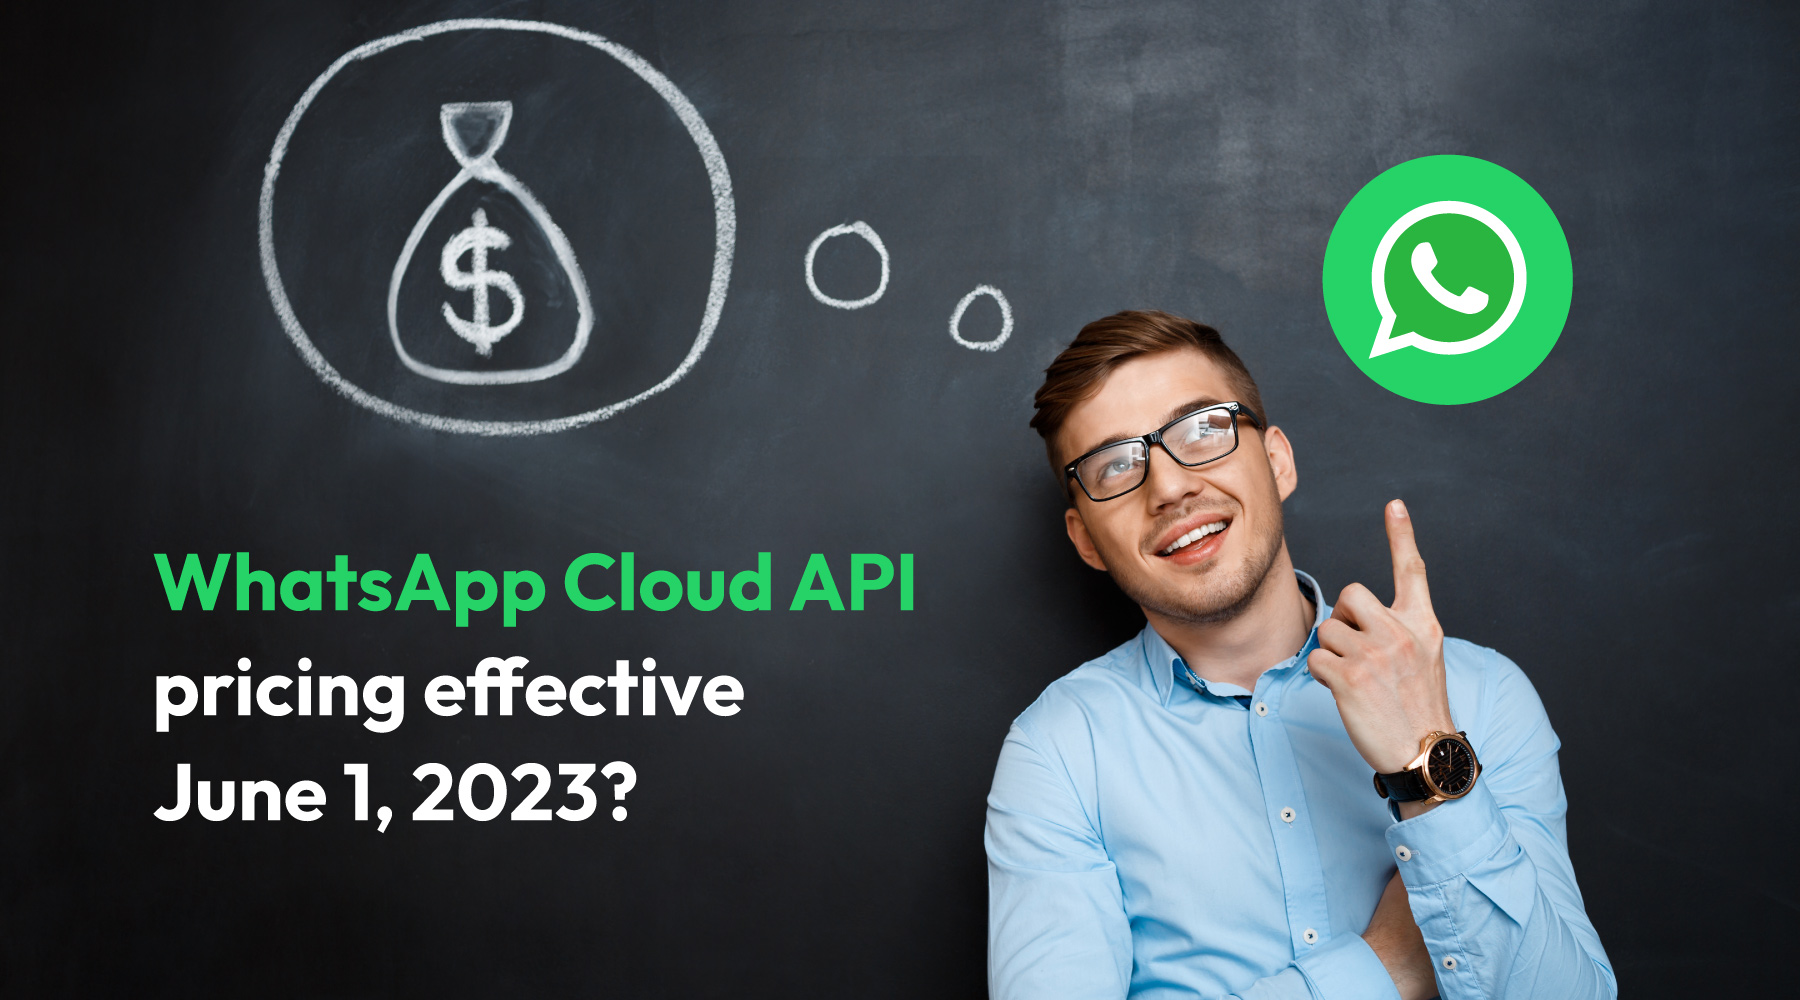 WhatsApp Cloud API pricing effective June 1, 2023?